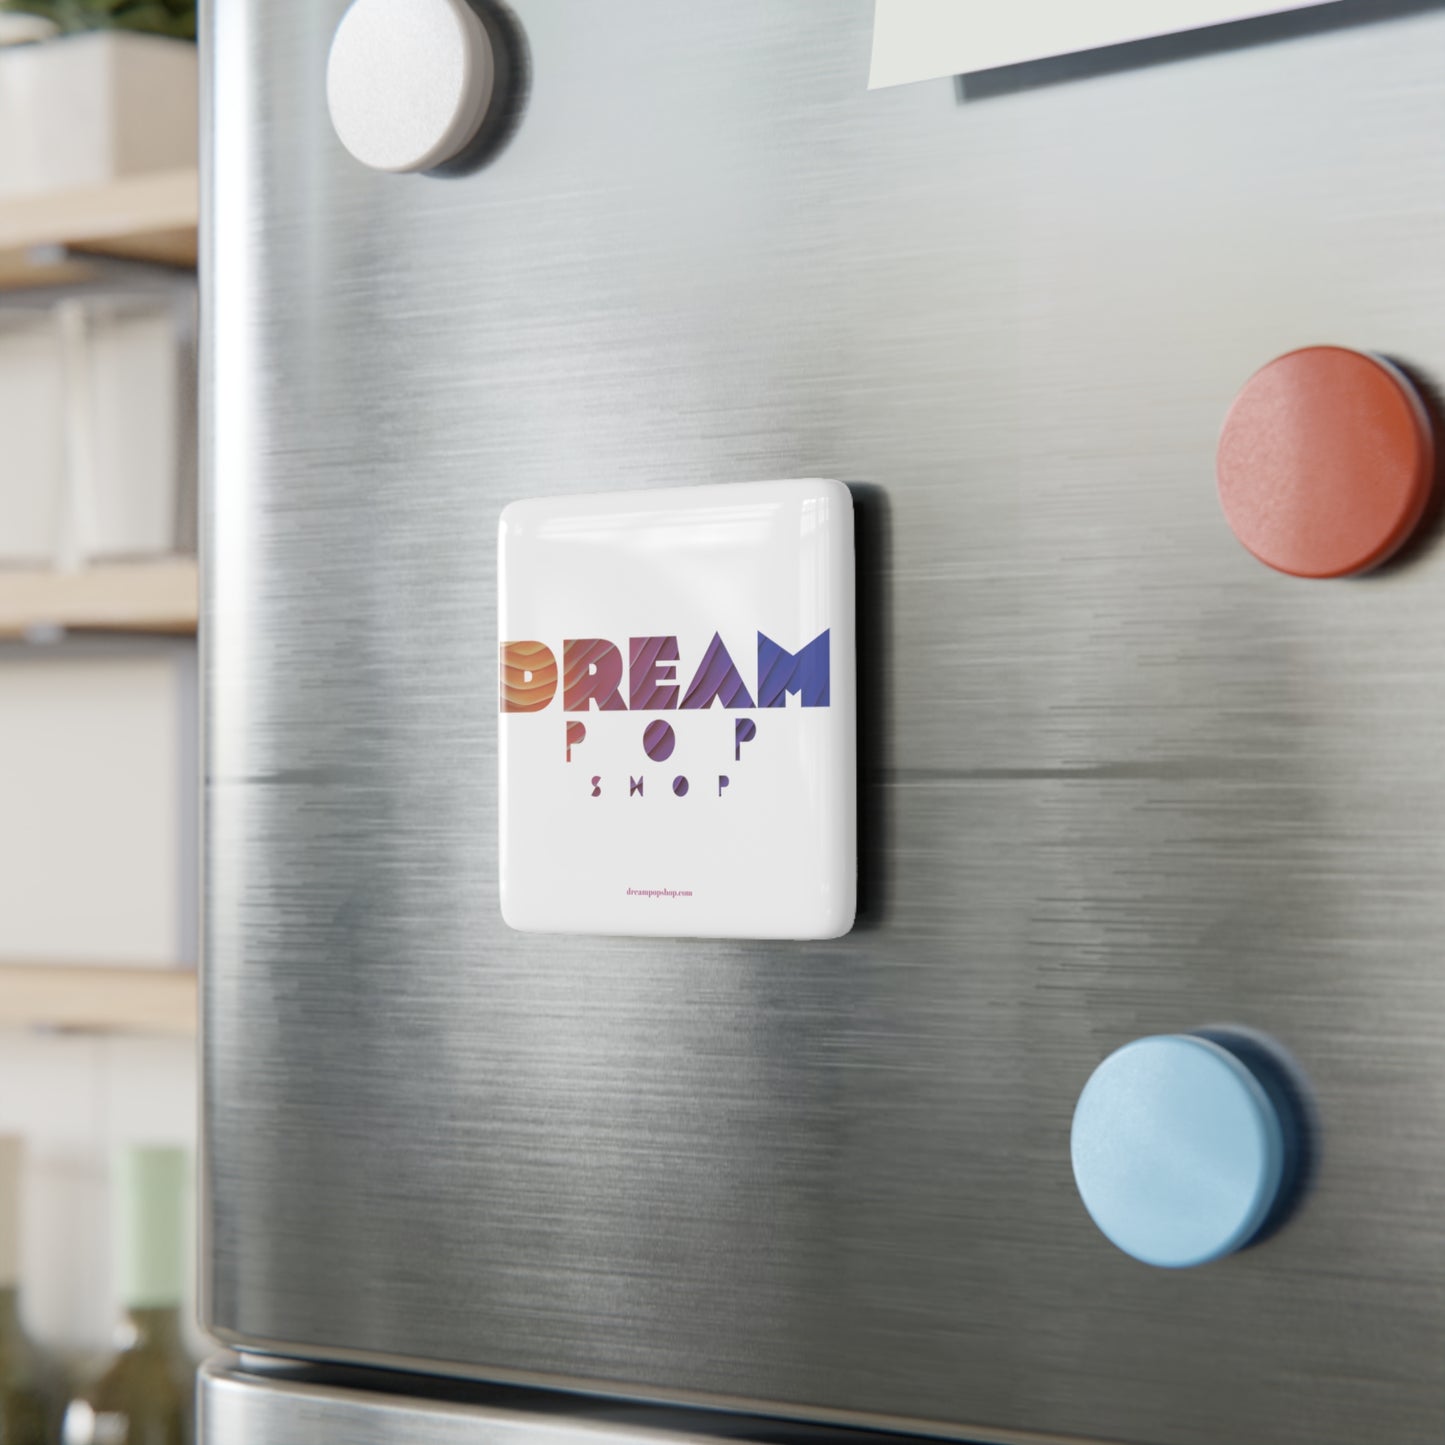 Dream Pop Shop Magnet